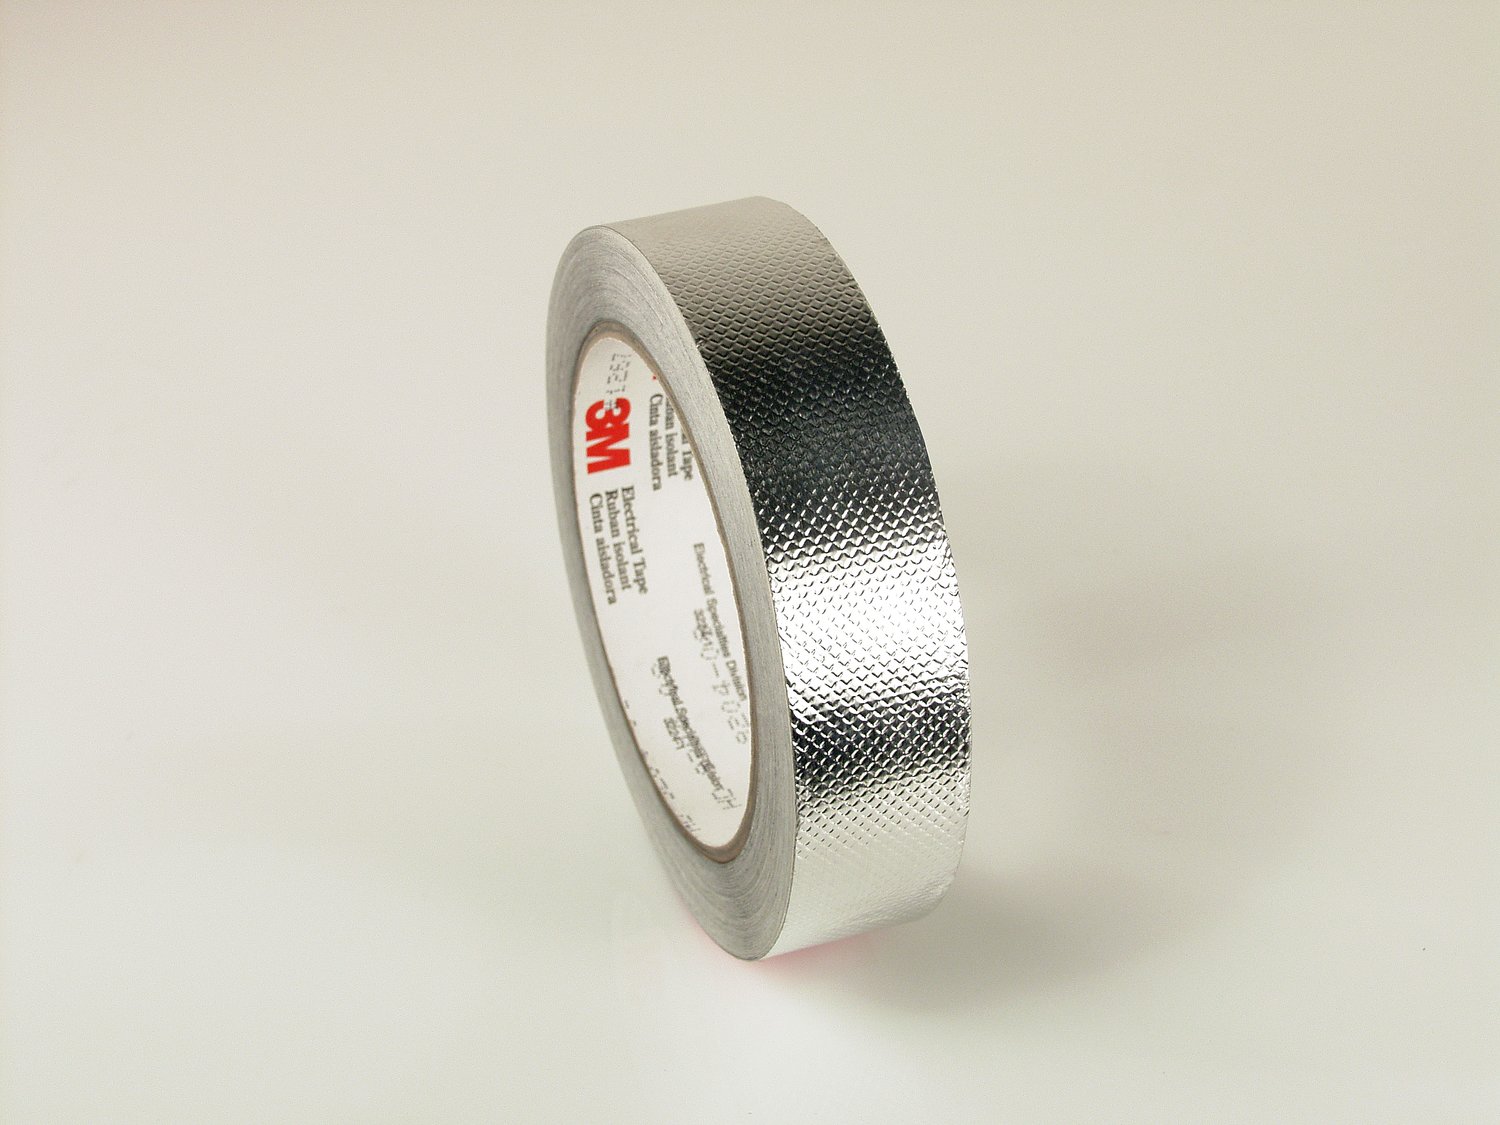 7010398765 - 3M Embossed Aluminum Foil EMI Shielding Tape 1267, 1/2 in x 18 yd, 3 in
Paper Core, 18 Rolls/Case